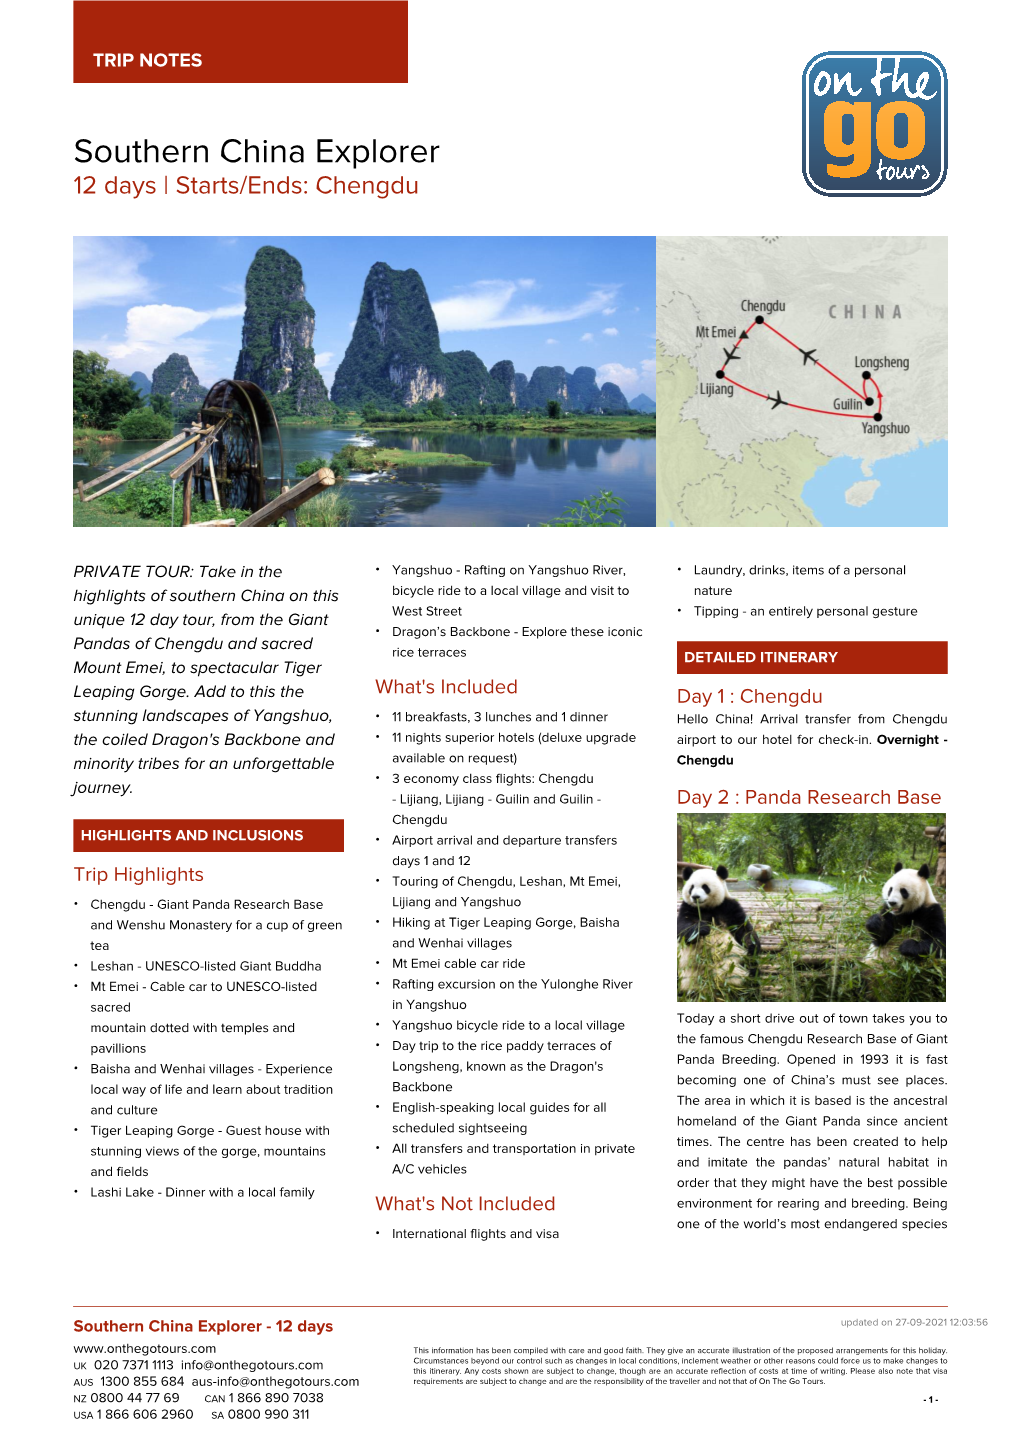 Southern China Explorer 12 Days | Starts/Ends: Chengdu